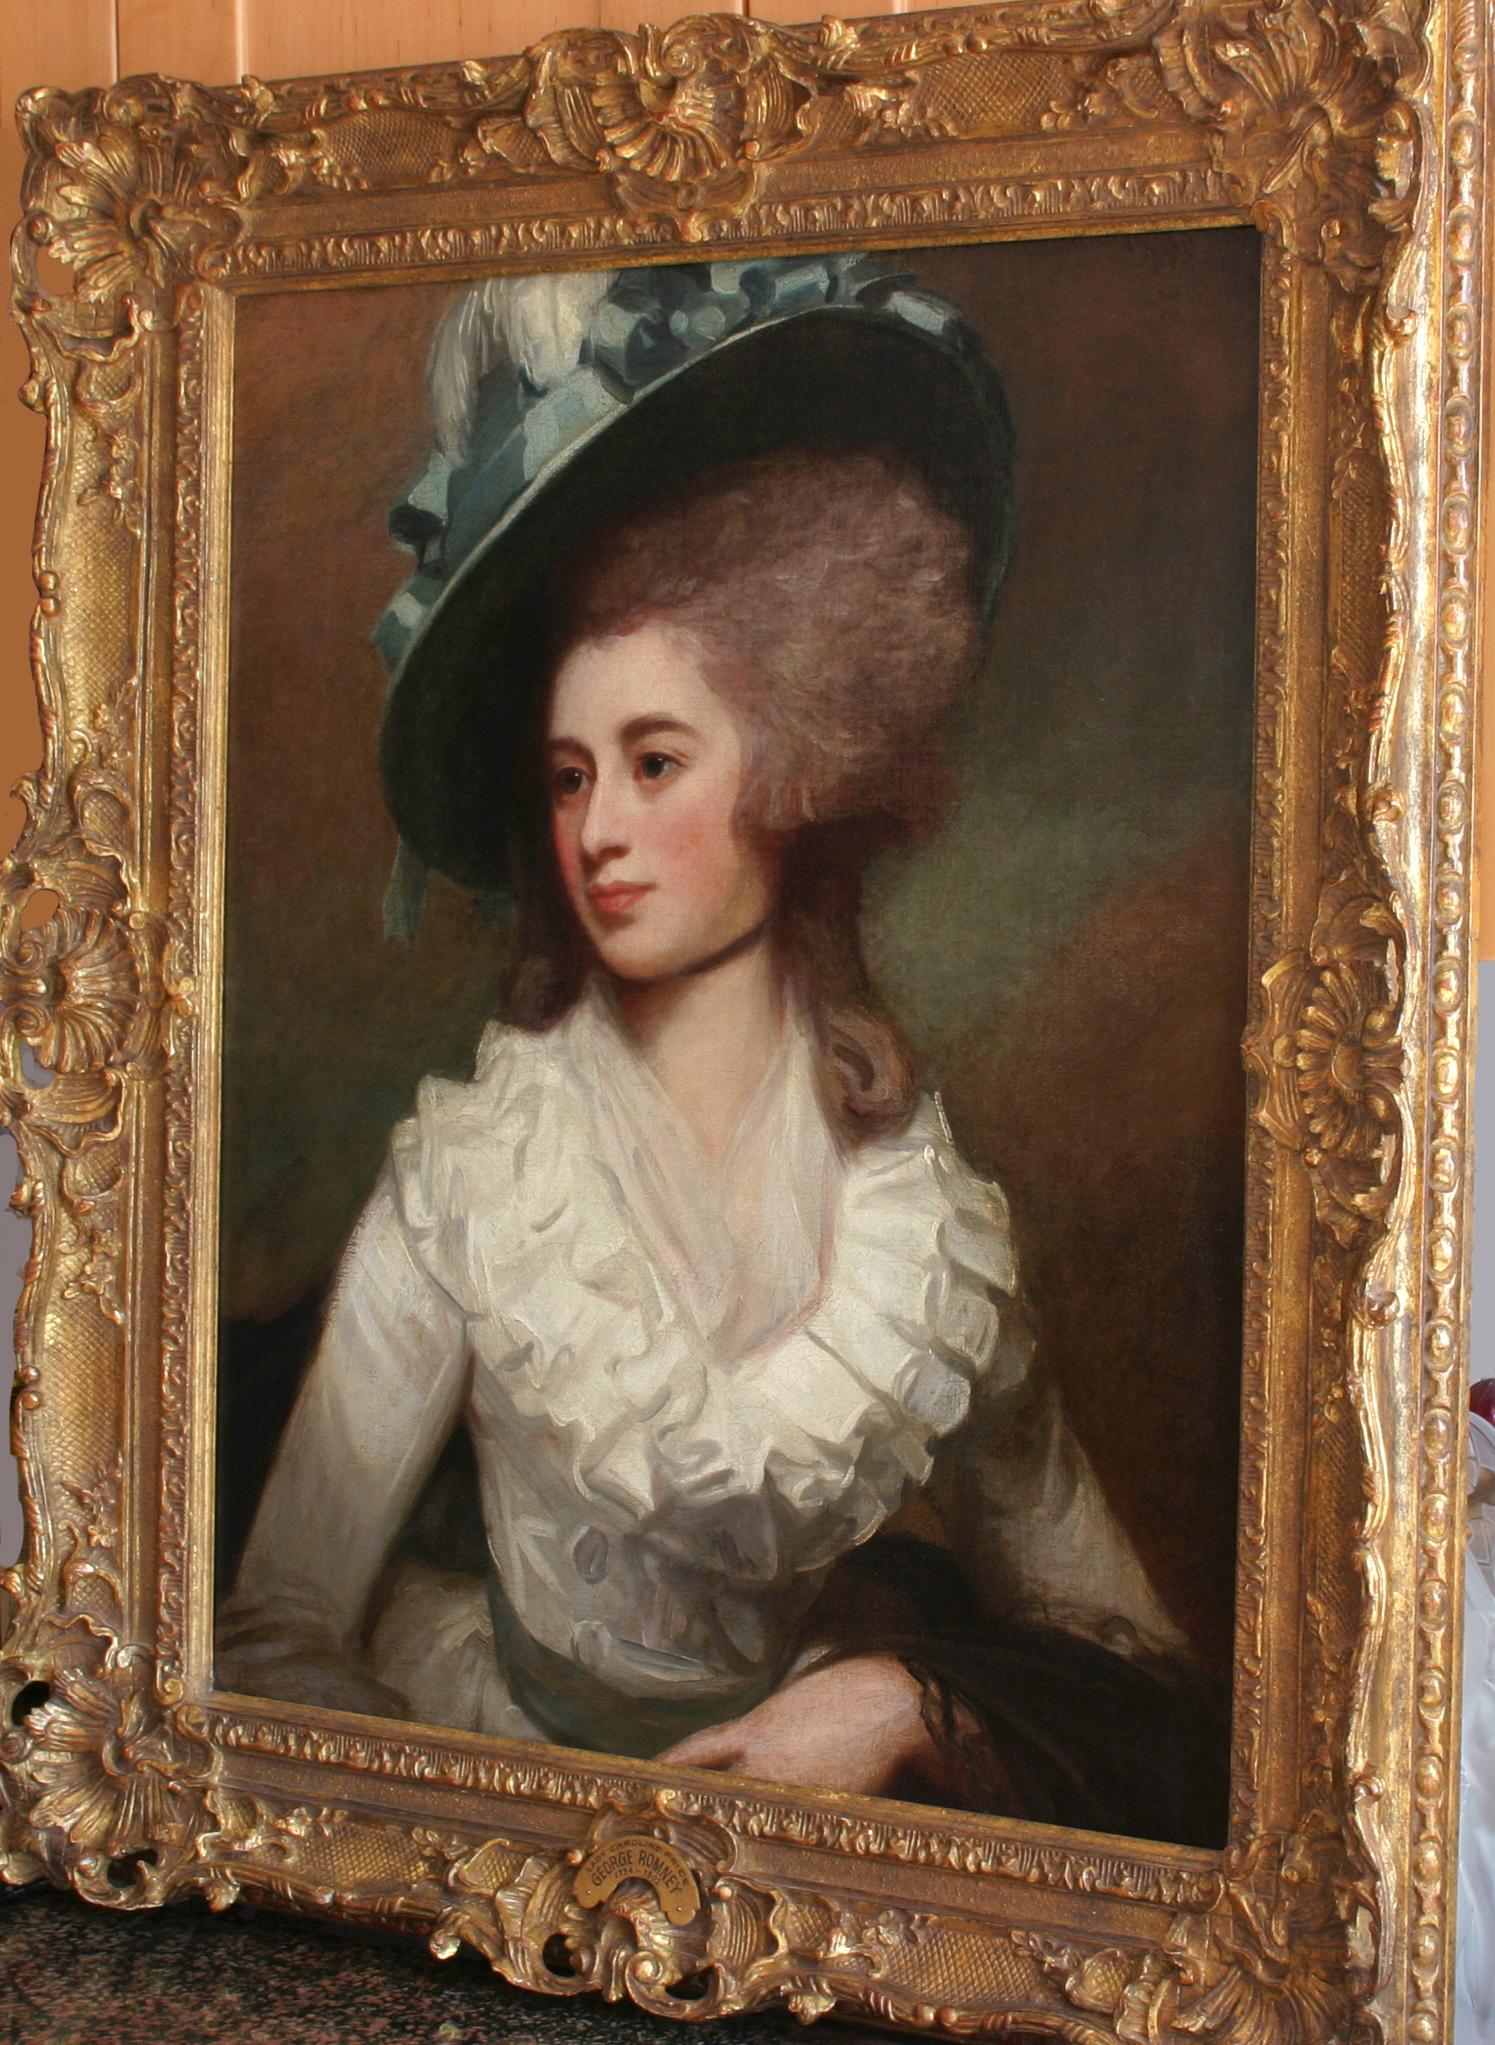 Portrait de Lady Caroline Price - Painting de George Romney